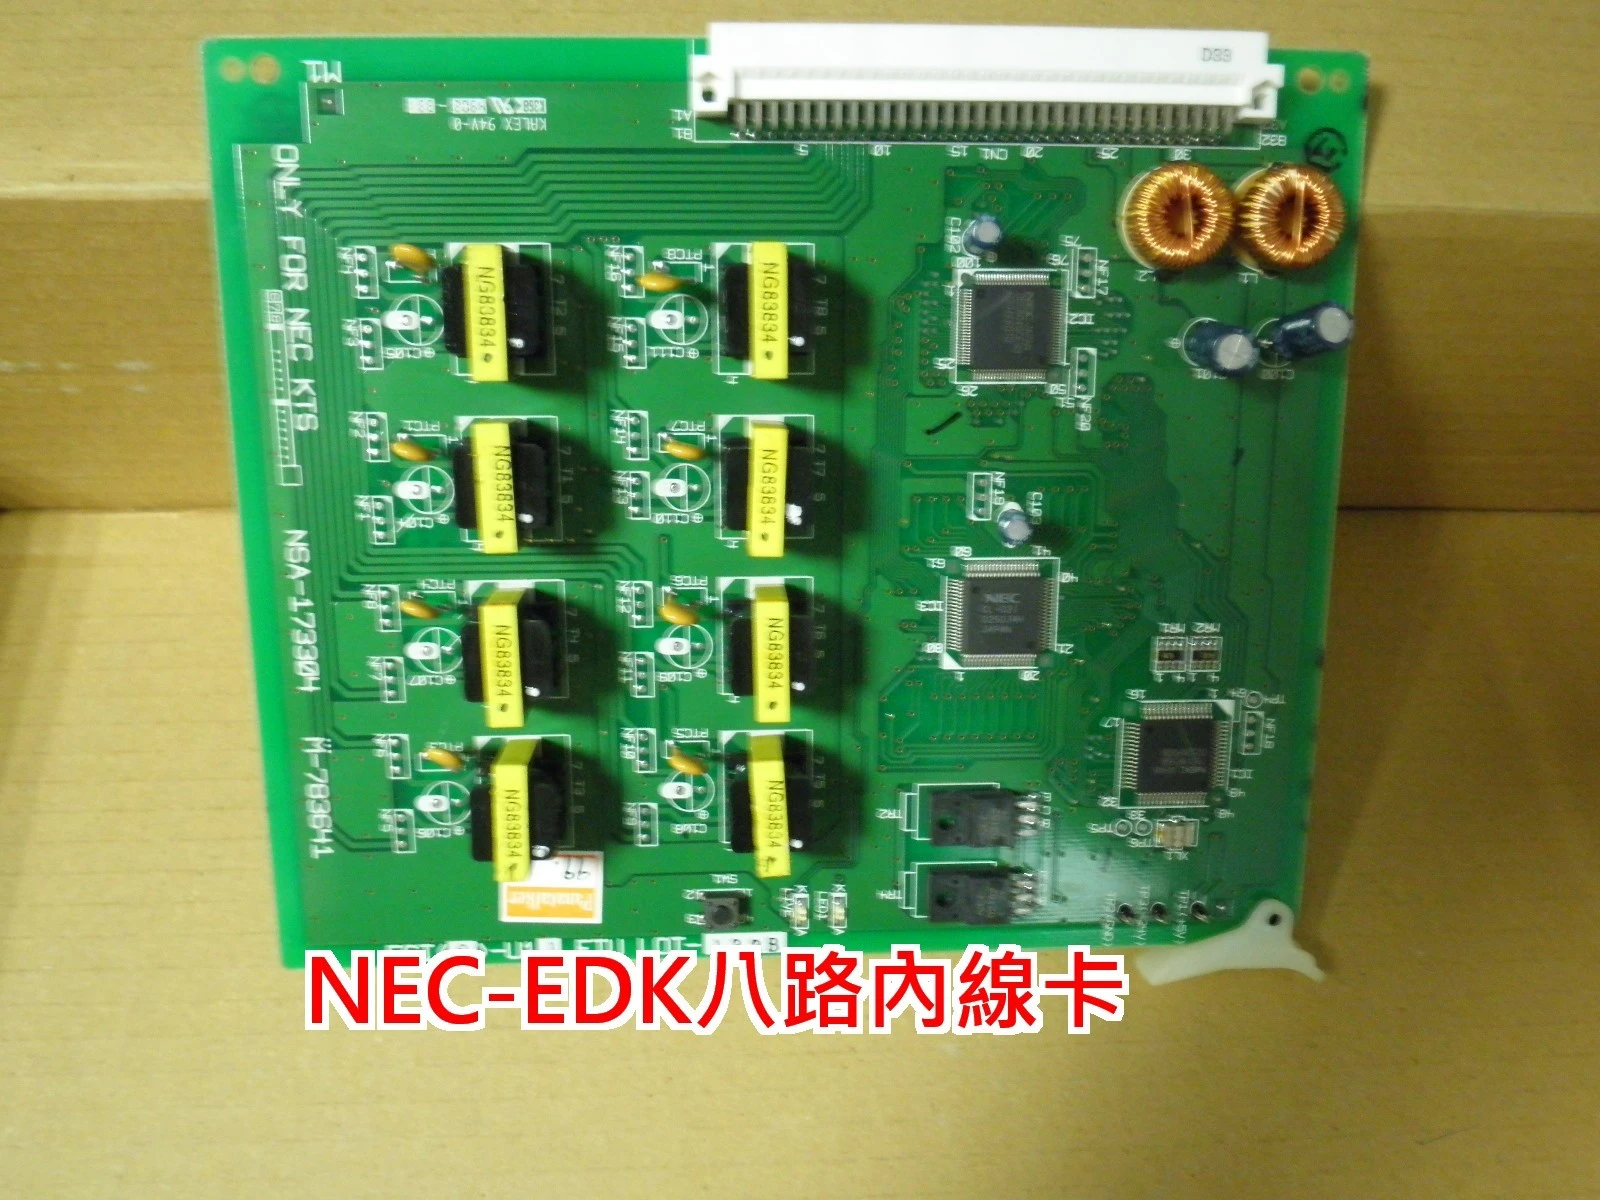 NEC-EDK主機專用機板(詳內說明)